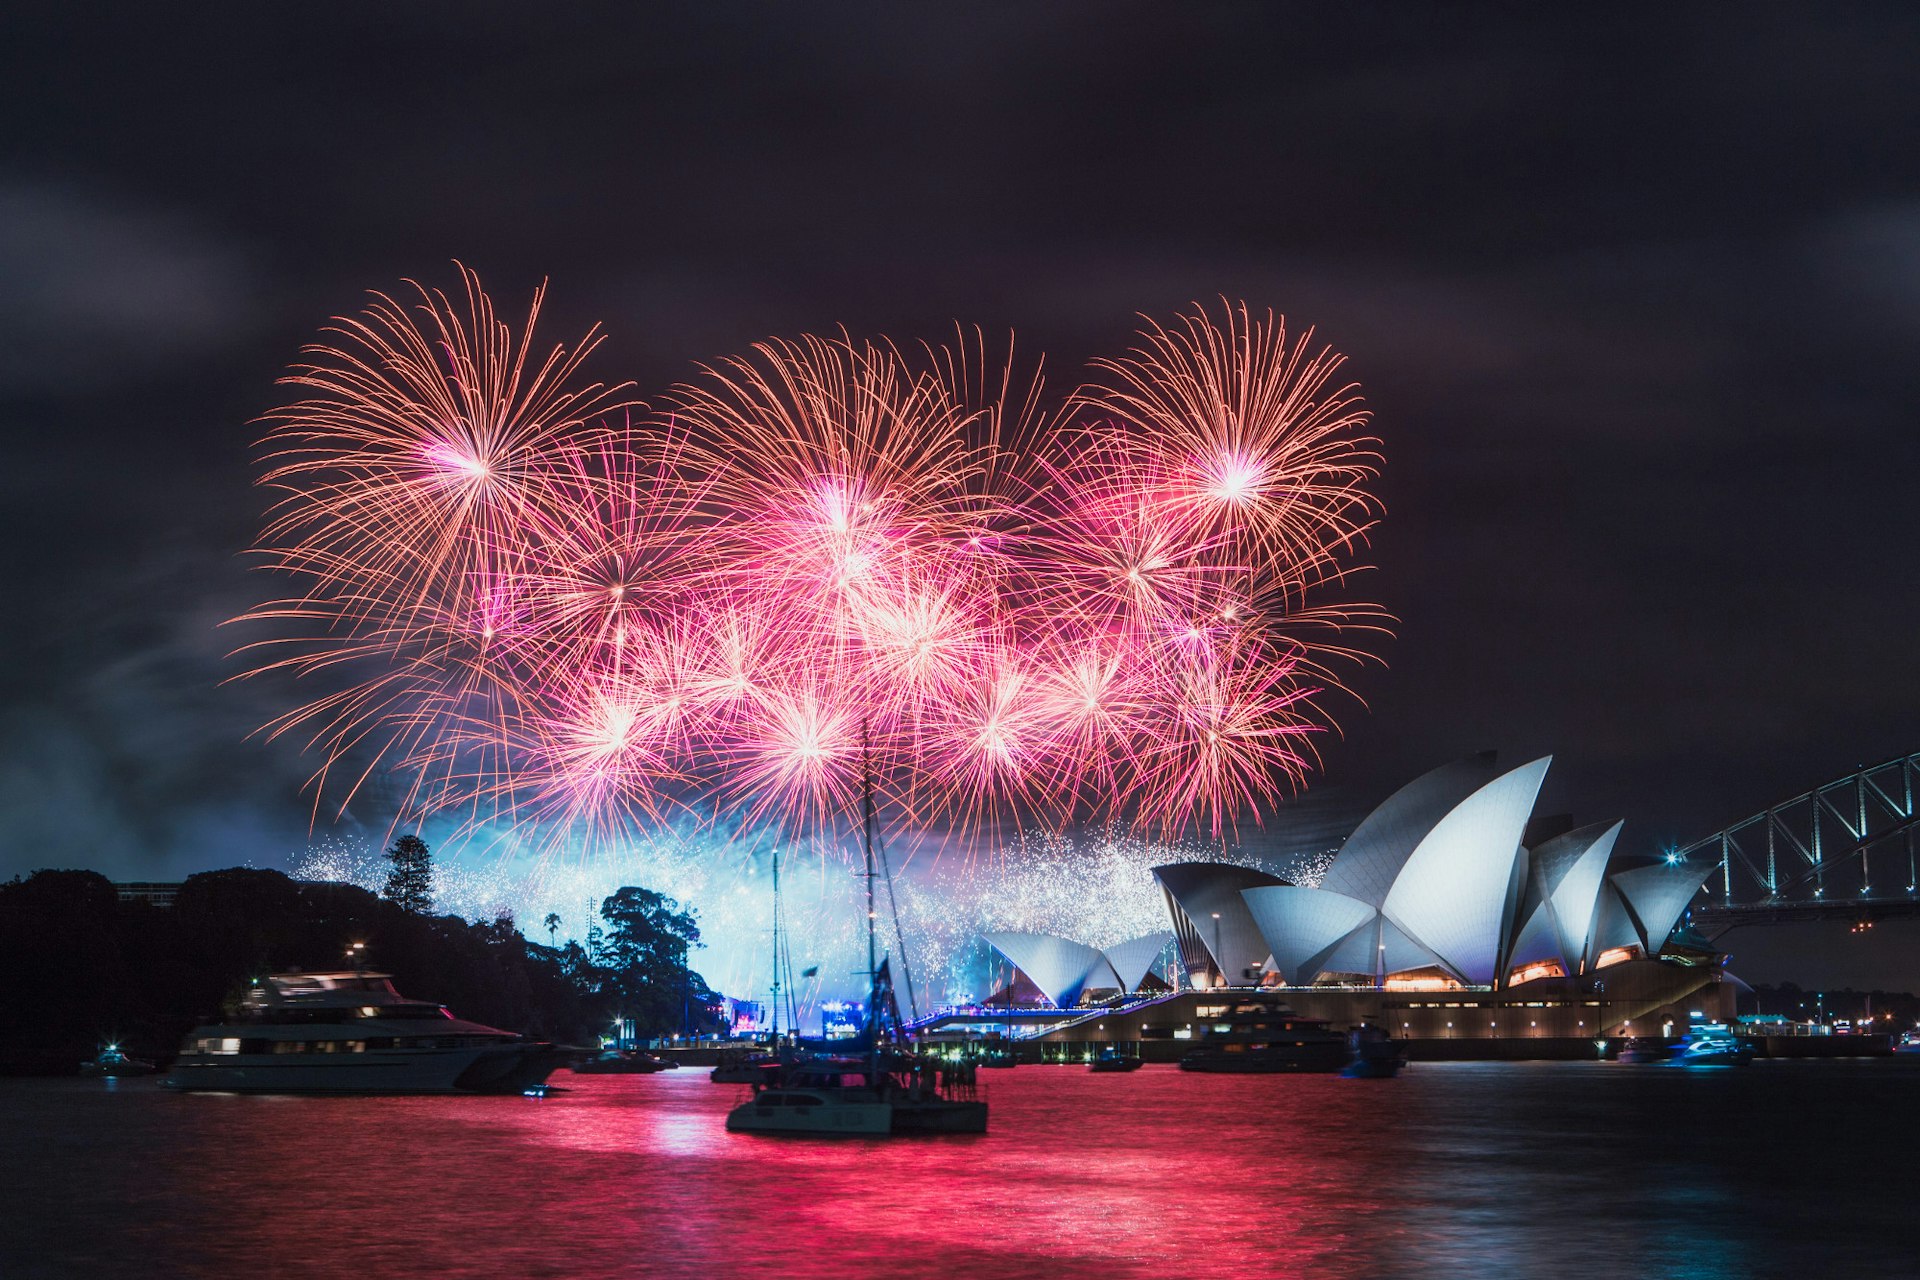 Sydney fireworks display Image by aiyoshi597